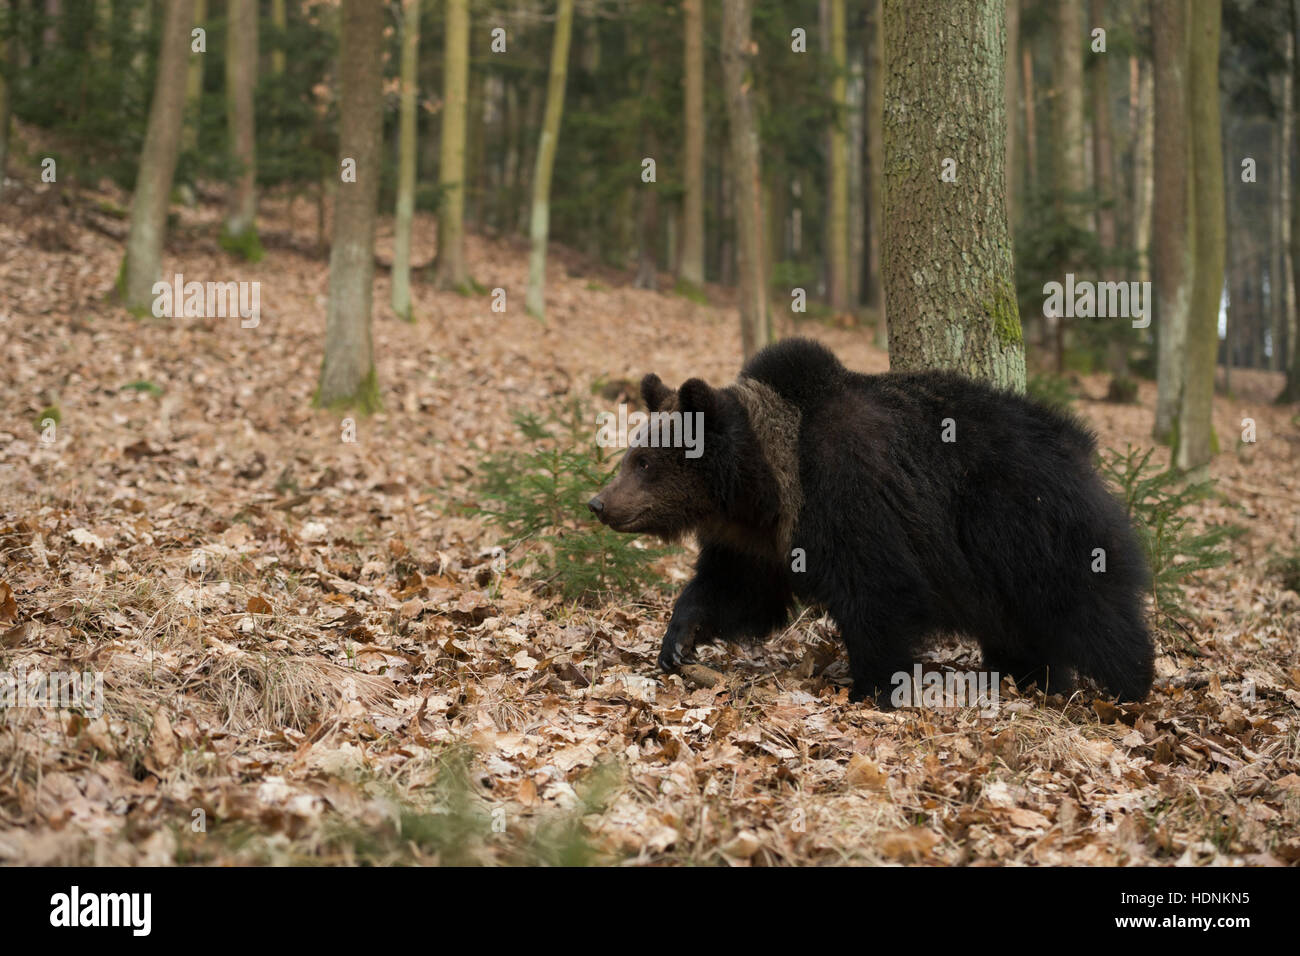 European Brown Bear / Braunbaer ( Ursus arctos ), young, walking / roaming through a forest, exploring its surrounding. Stock Photo